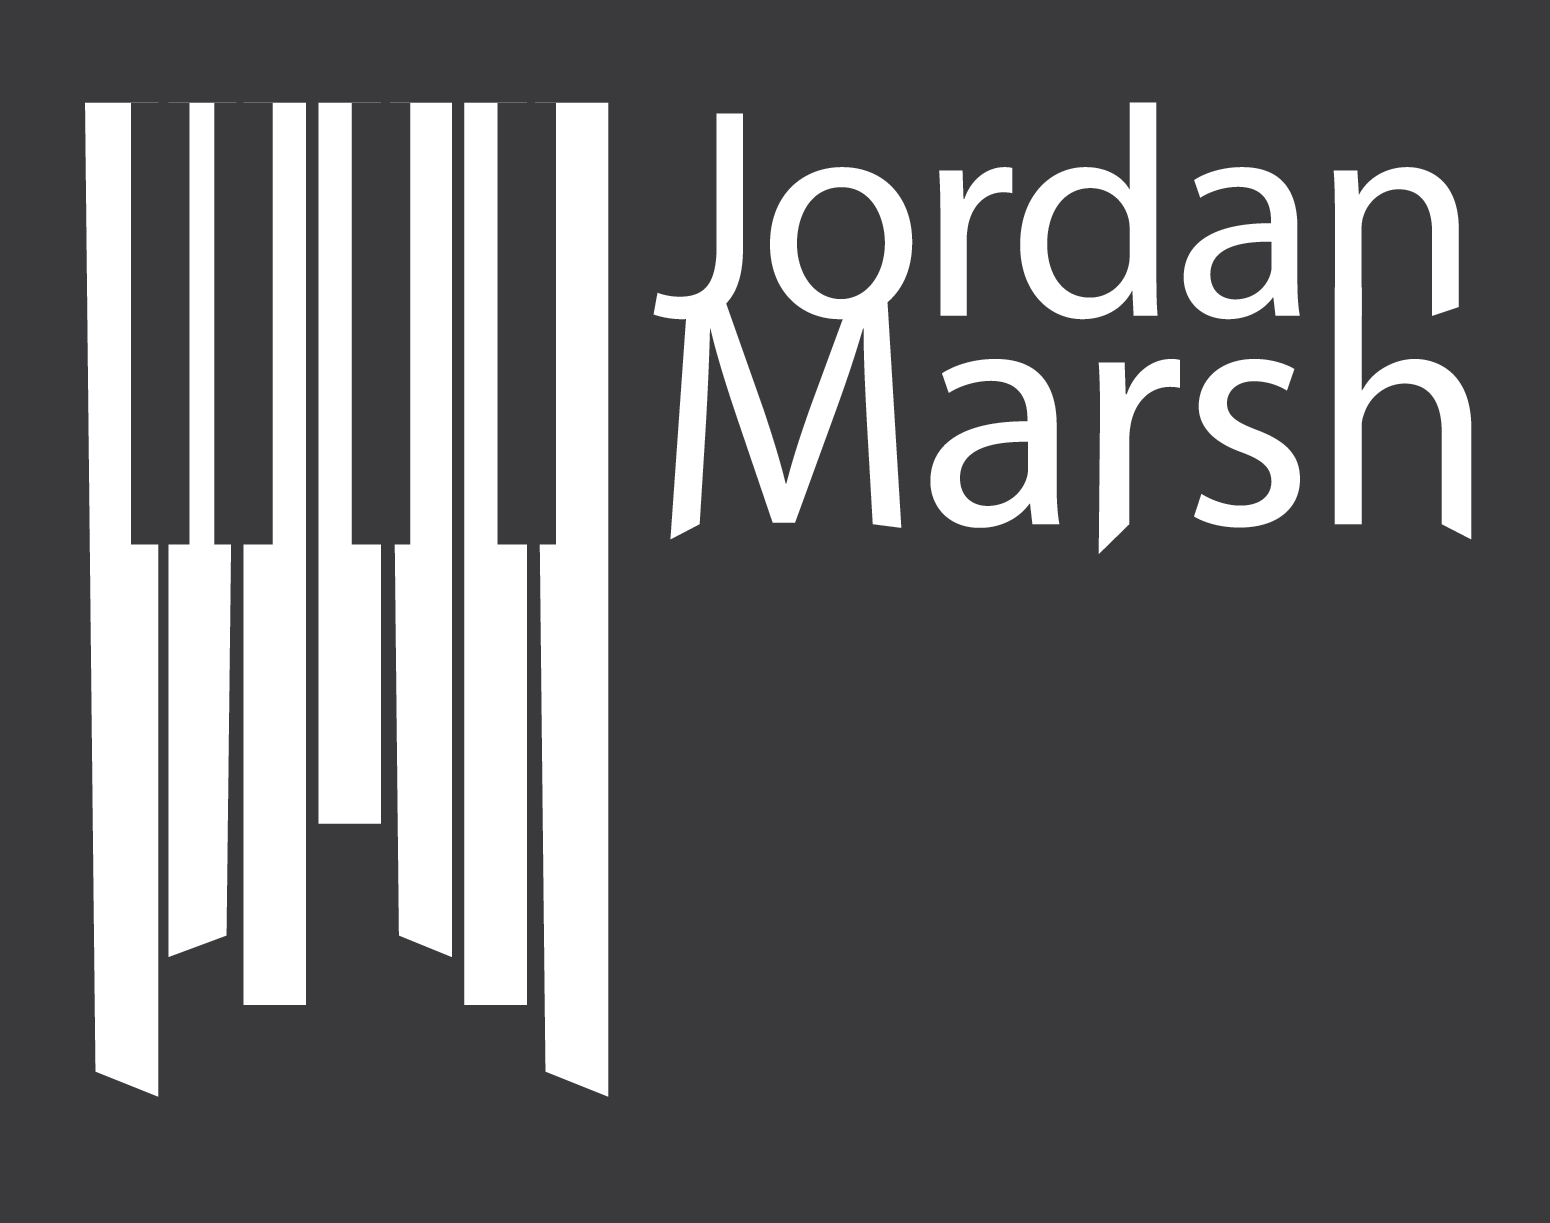 JORDAN MARSH